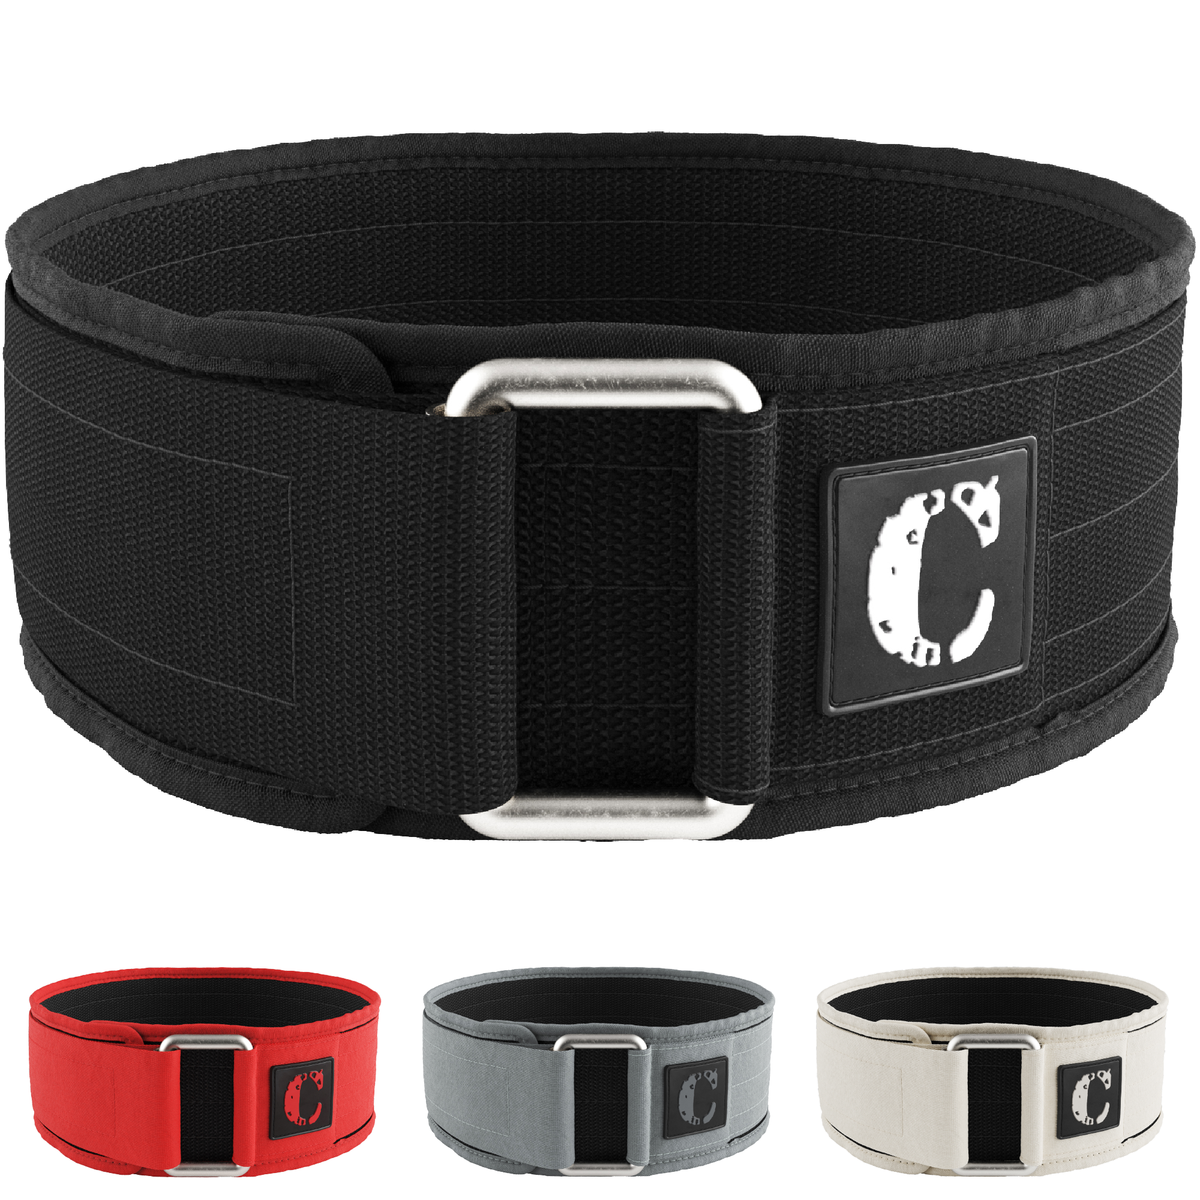 Contraband Black Label 4010 4 inch Nylon Weight Lifting Belt w/ Velcro